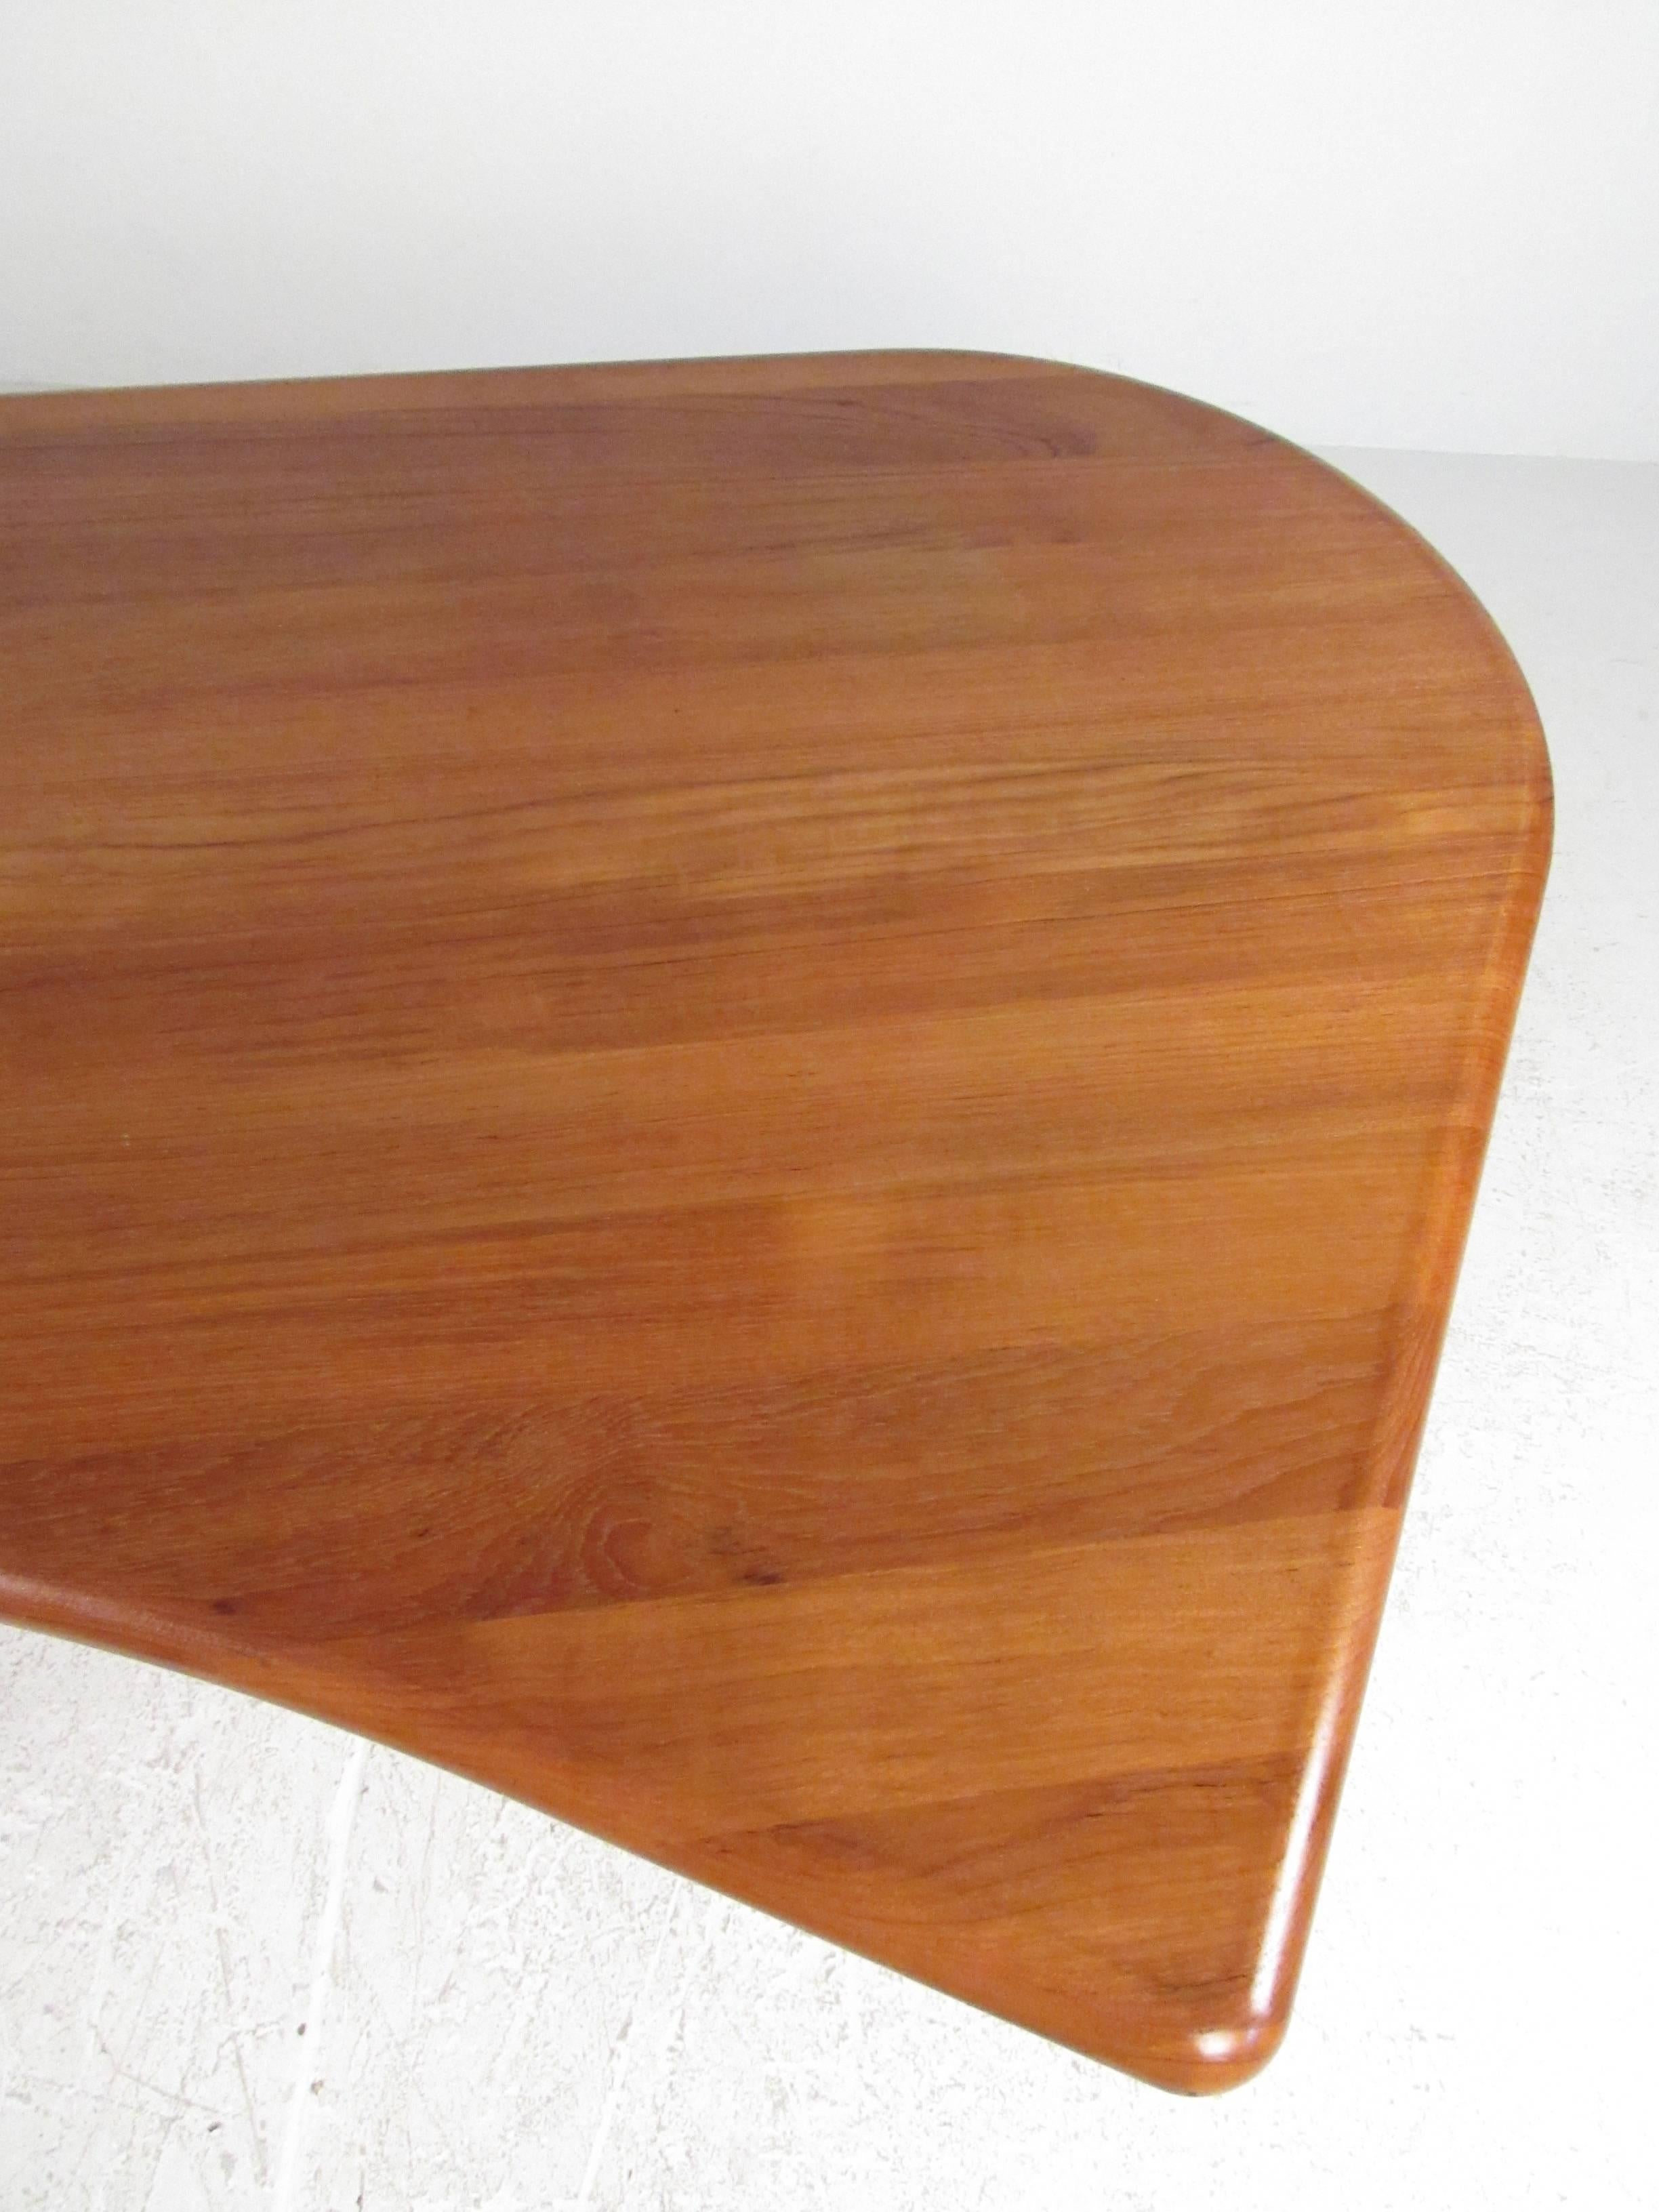 20th Century Organic Modernist Teak Desk by the Association of Danish Furniture Industries